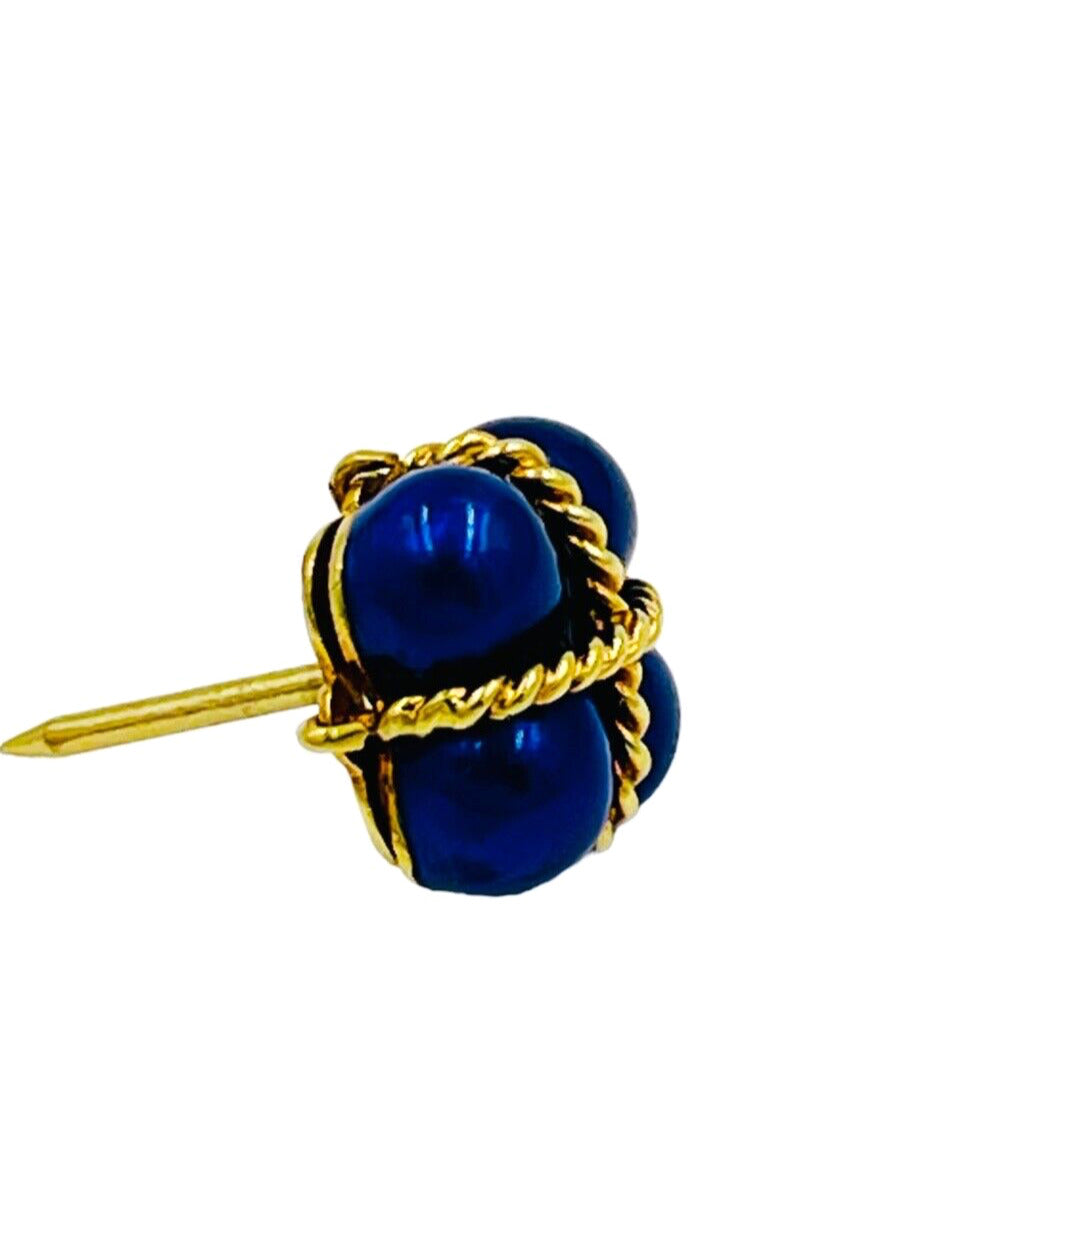 Vintage  18k Yellow Gold Tie Tack  Lapel Pin Blue Enamel